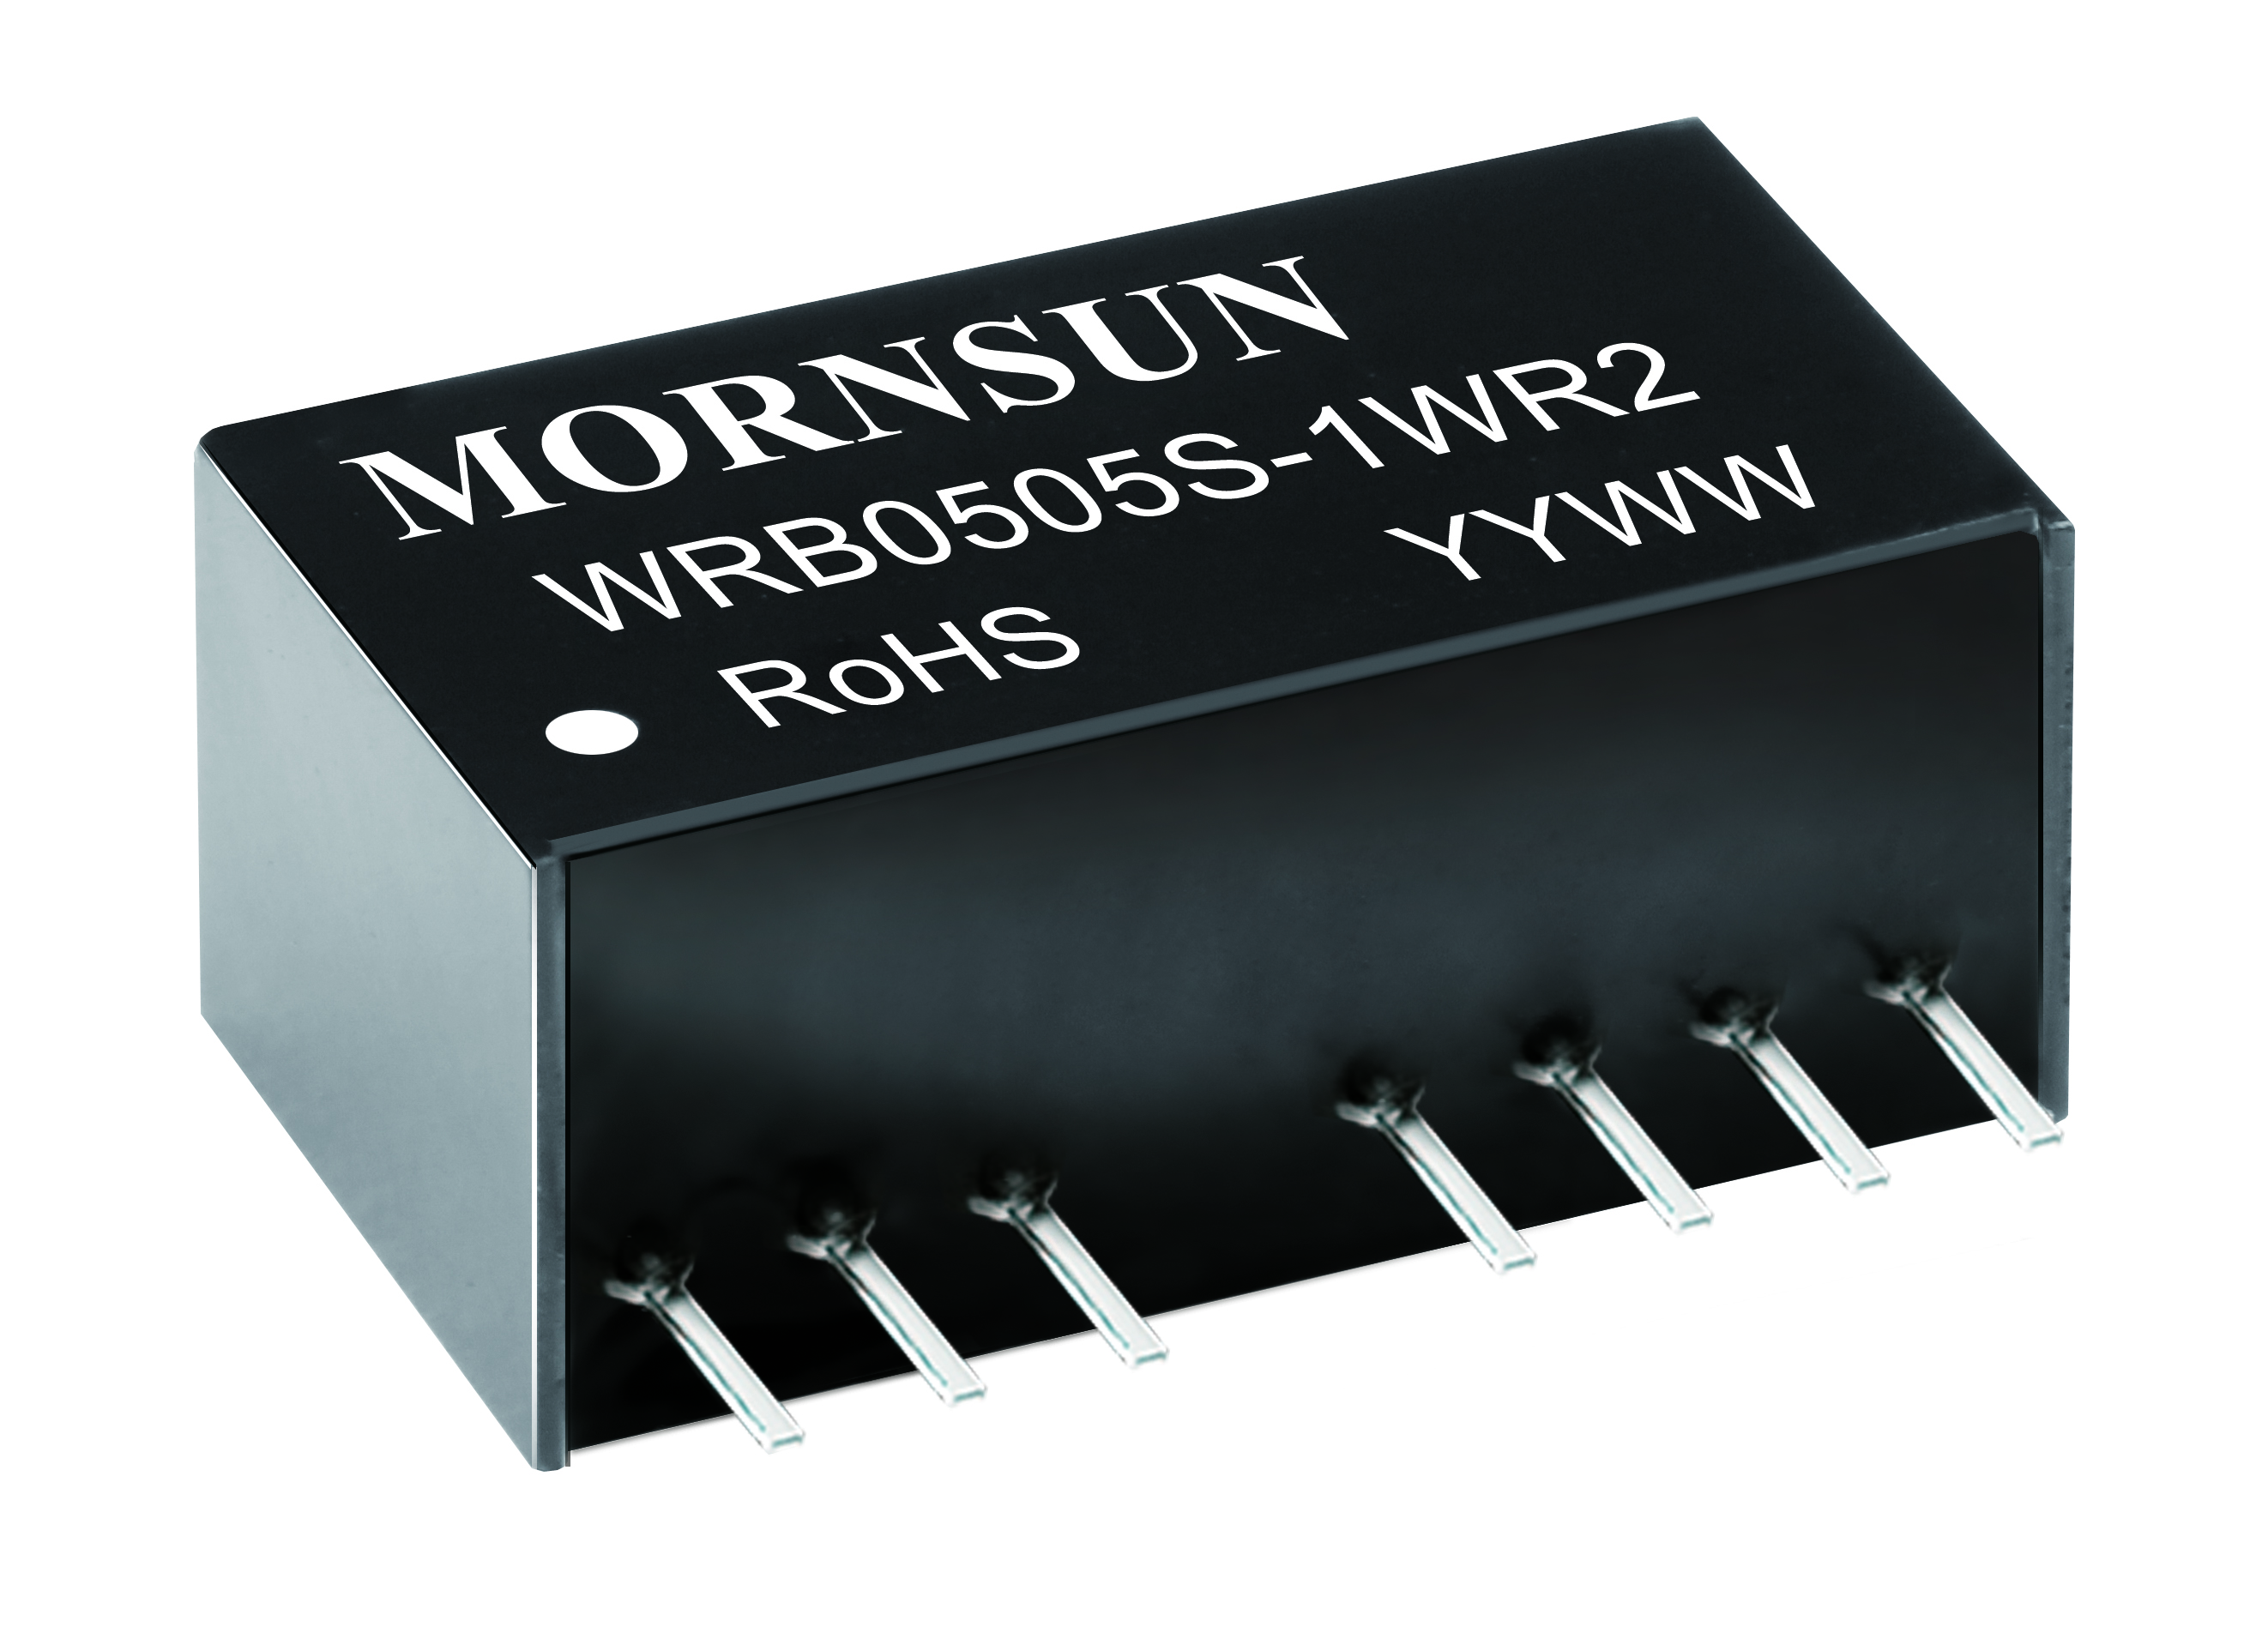 WRB1205S-1WR2 | MORNSUN